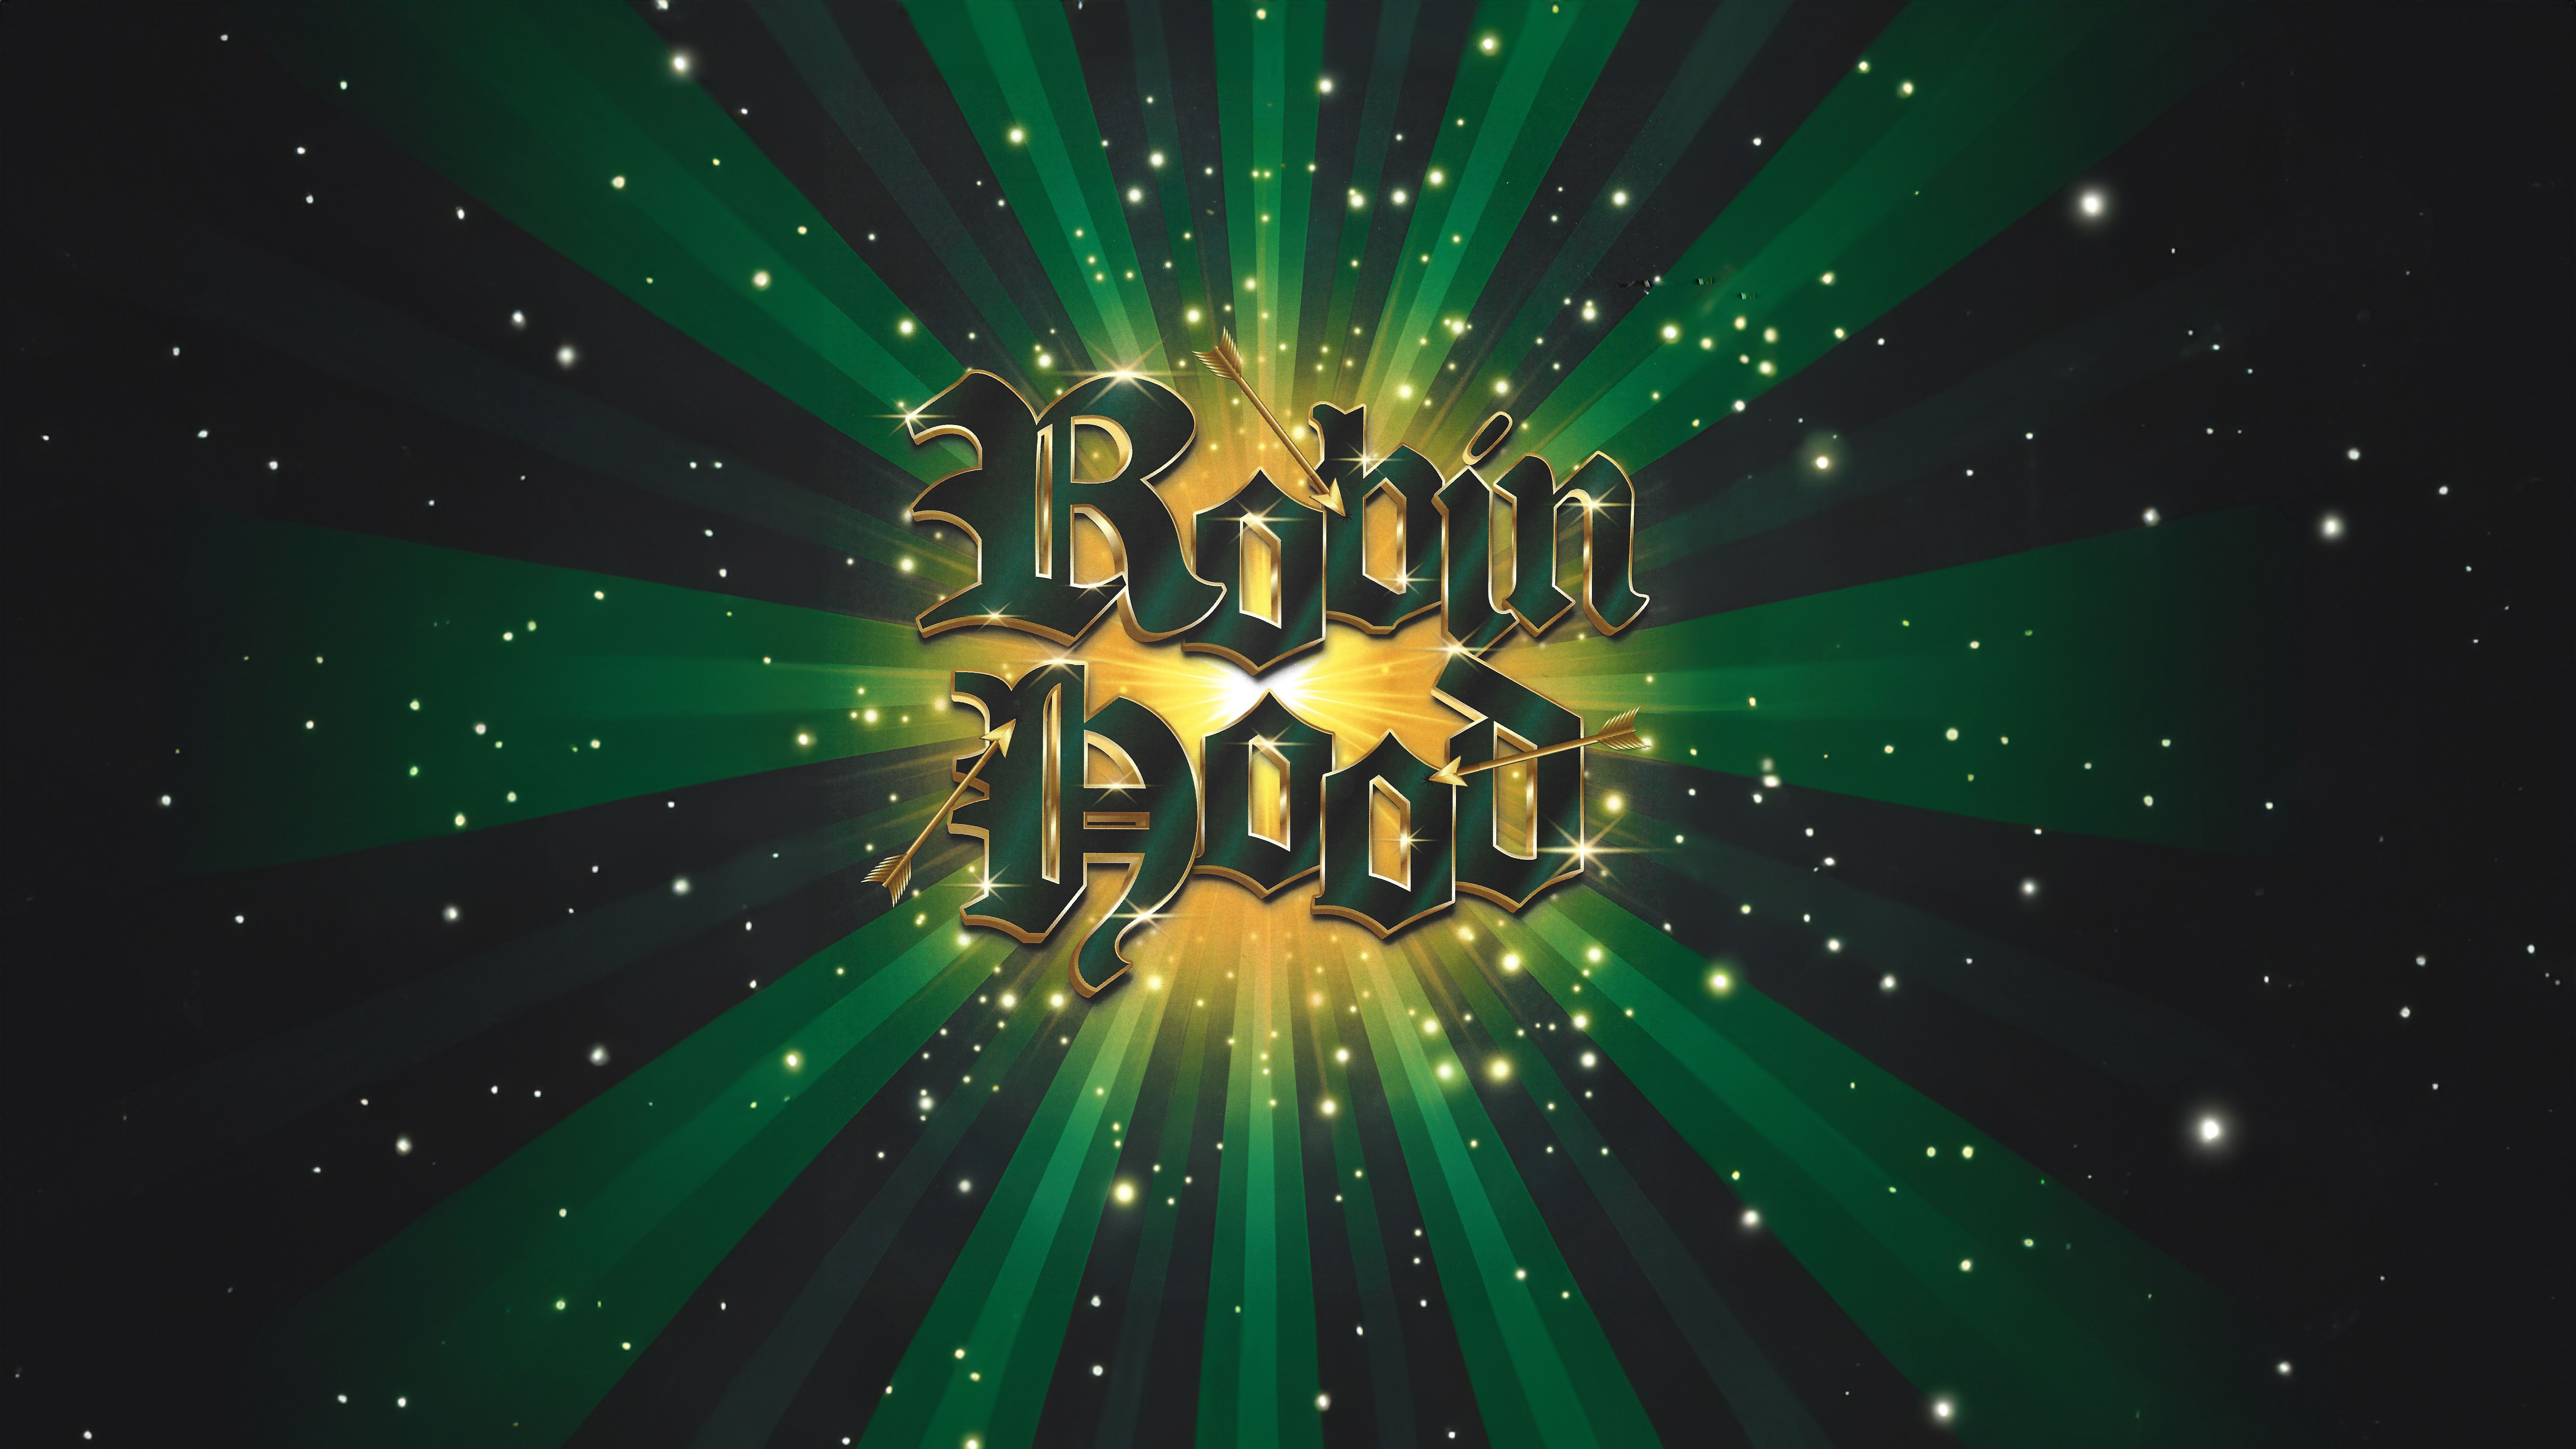 Robin Hood logo